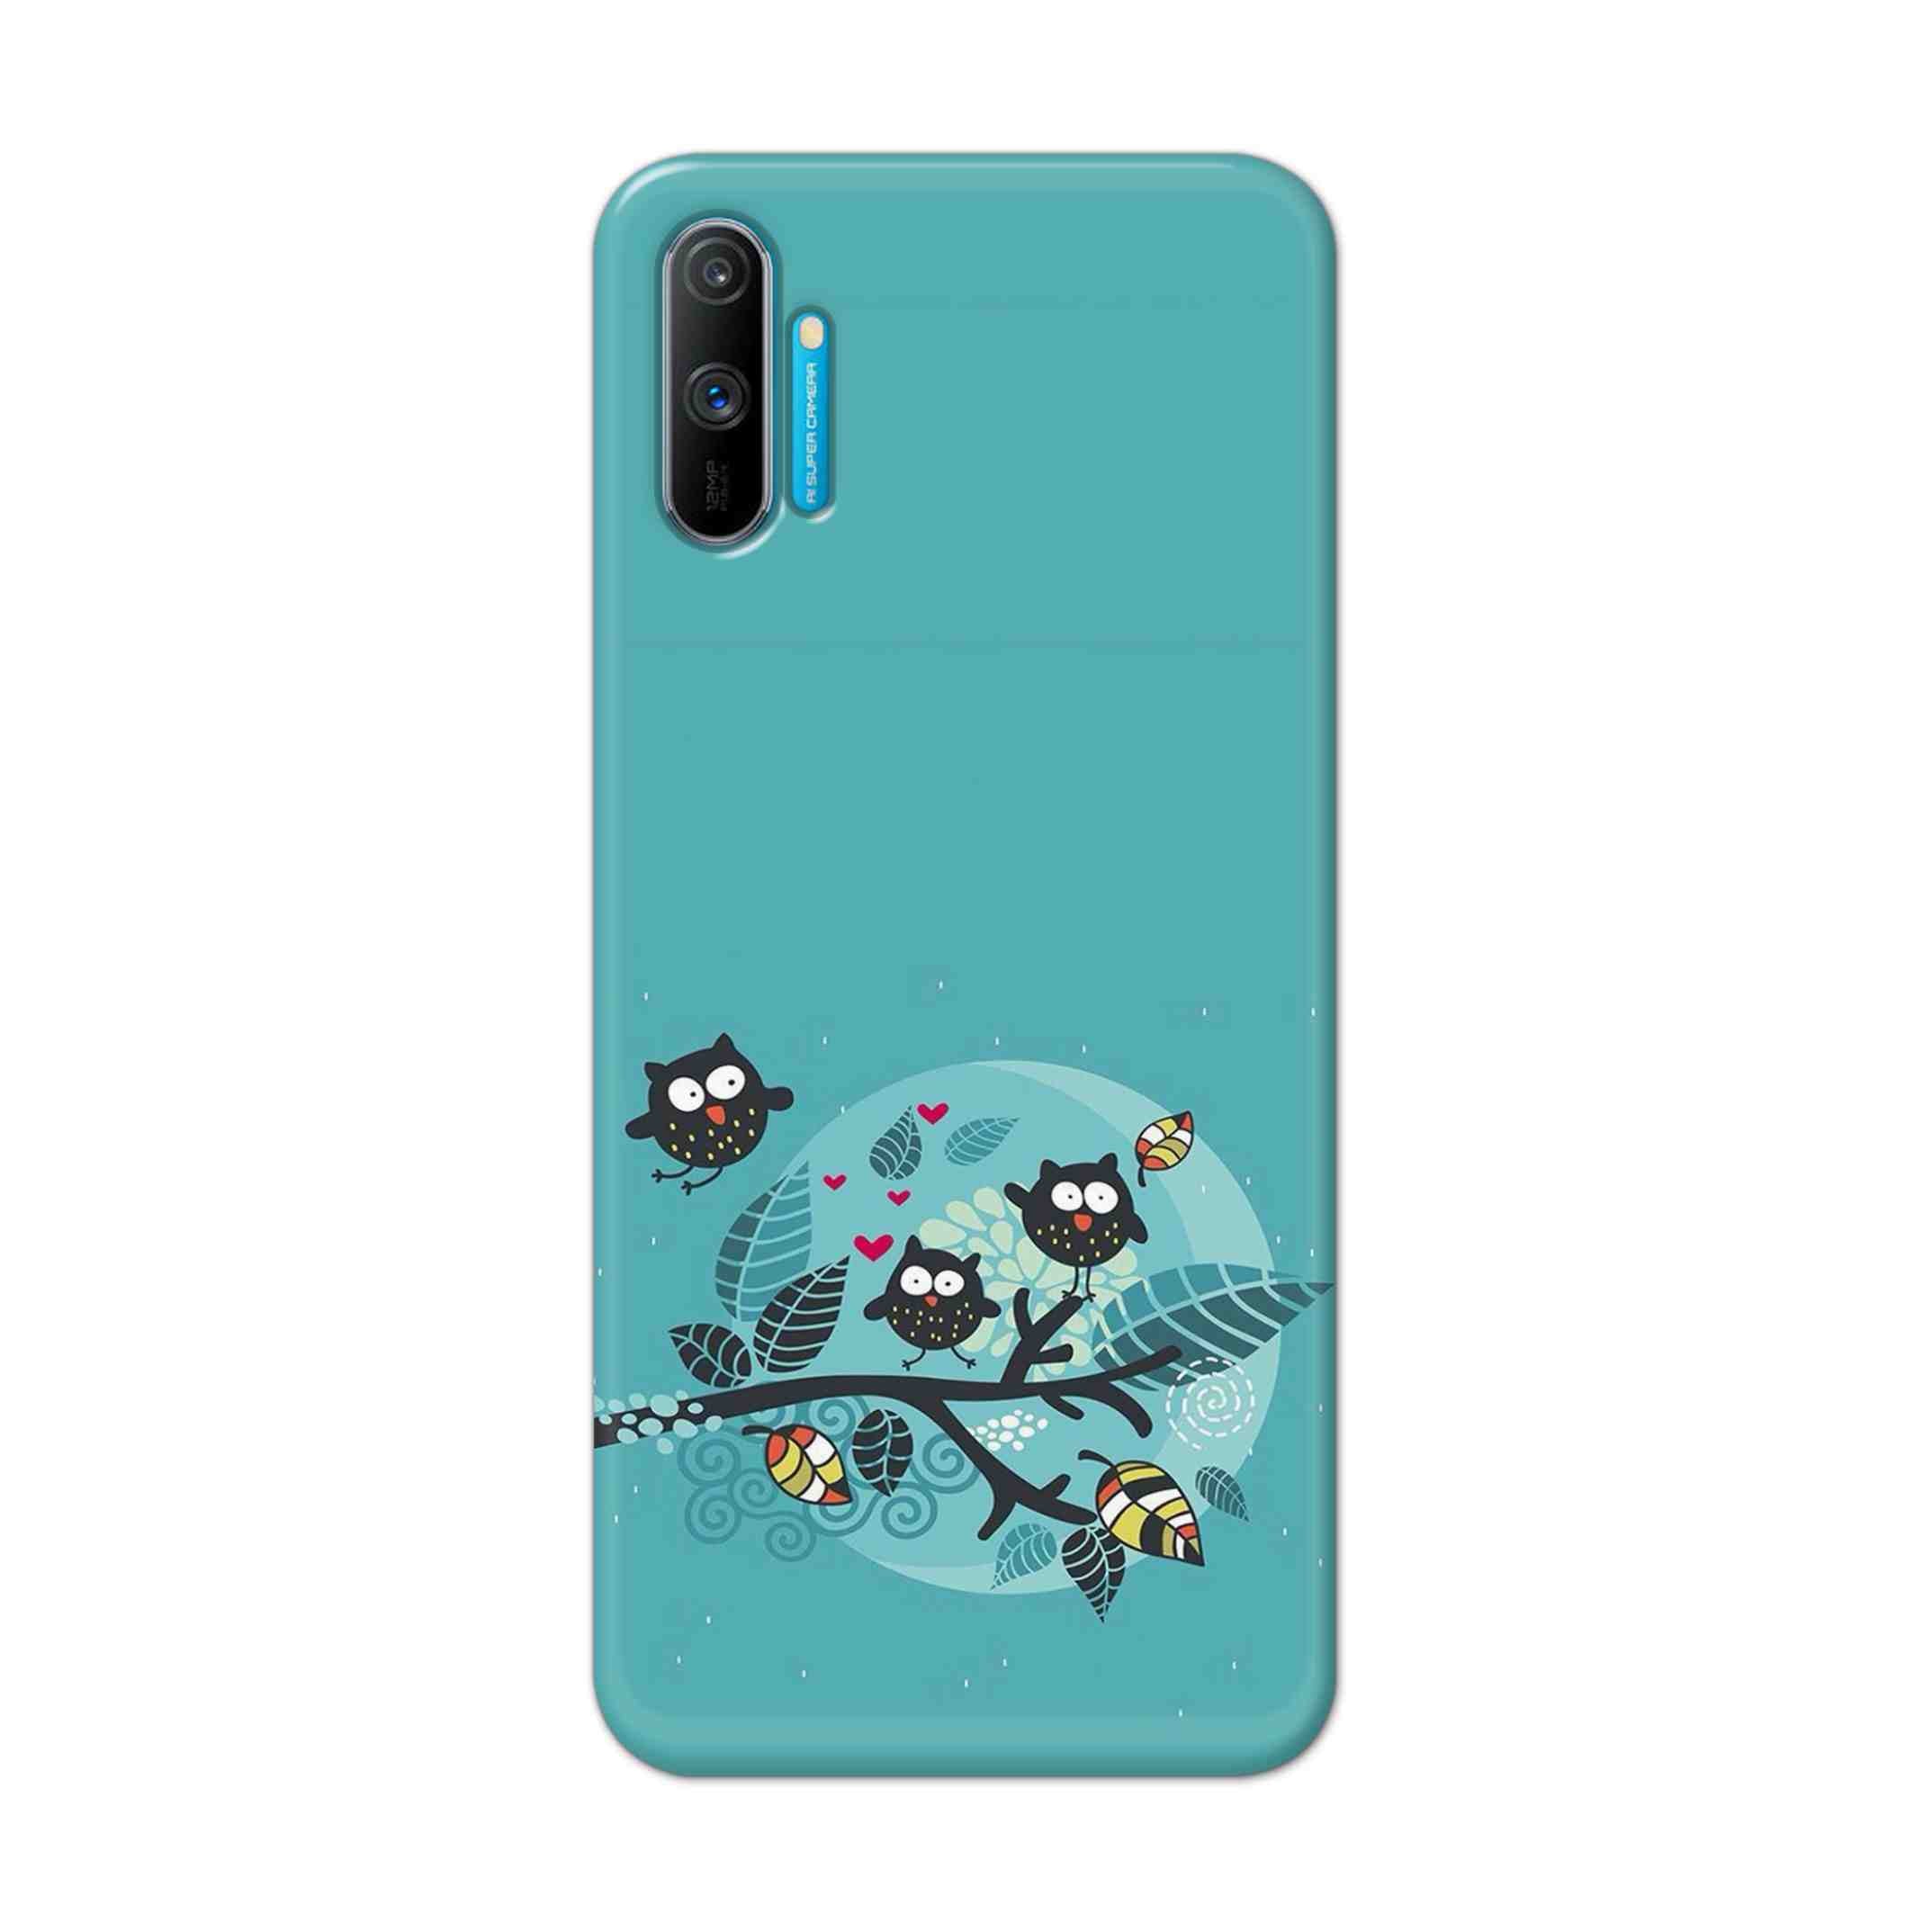 Buy Owl Hard Back Mobile Phone Case Cover For Realme C3 Online